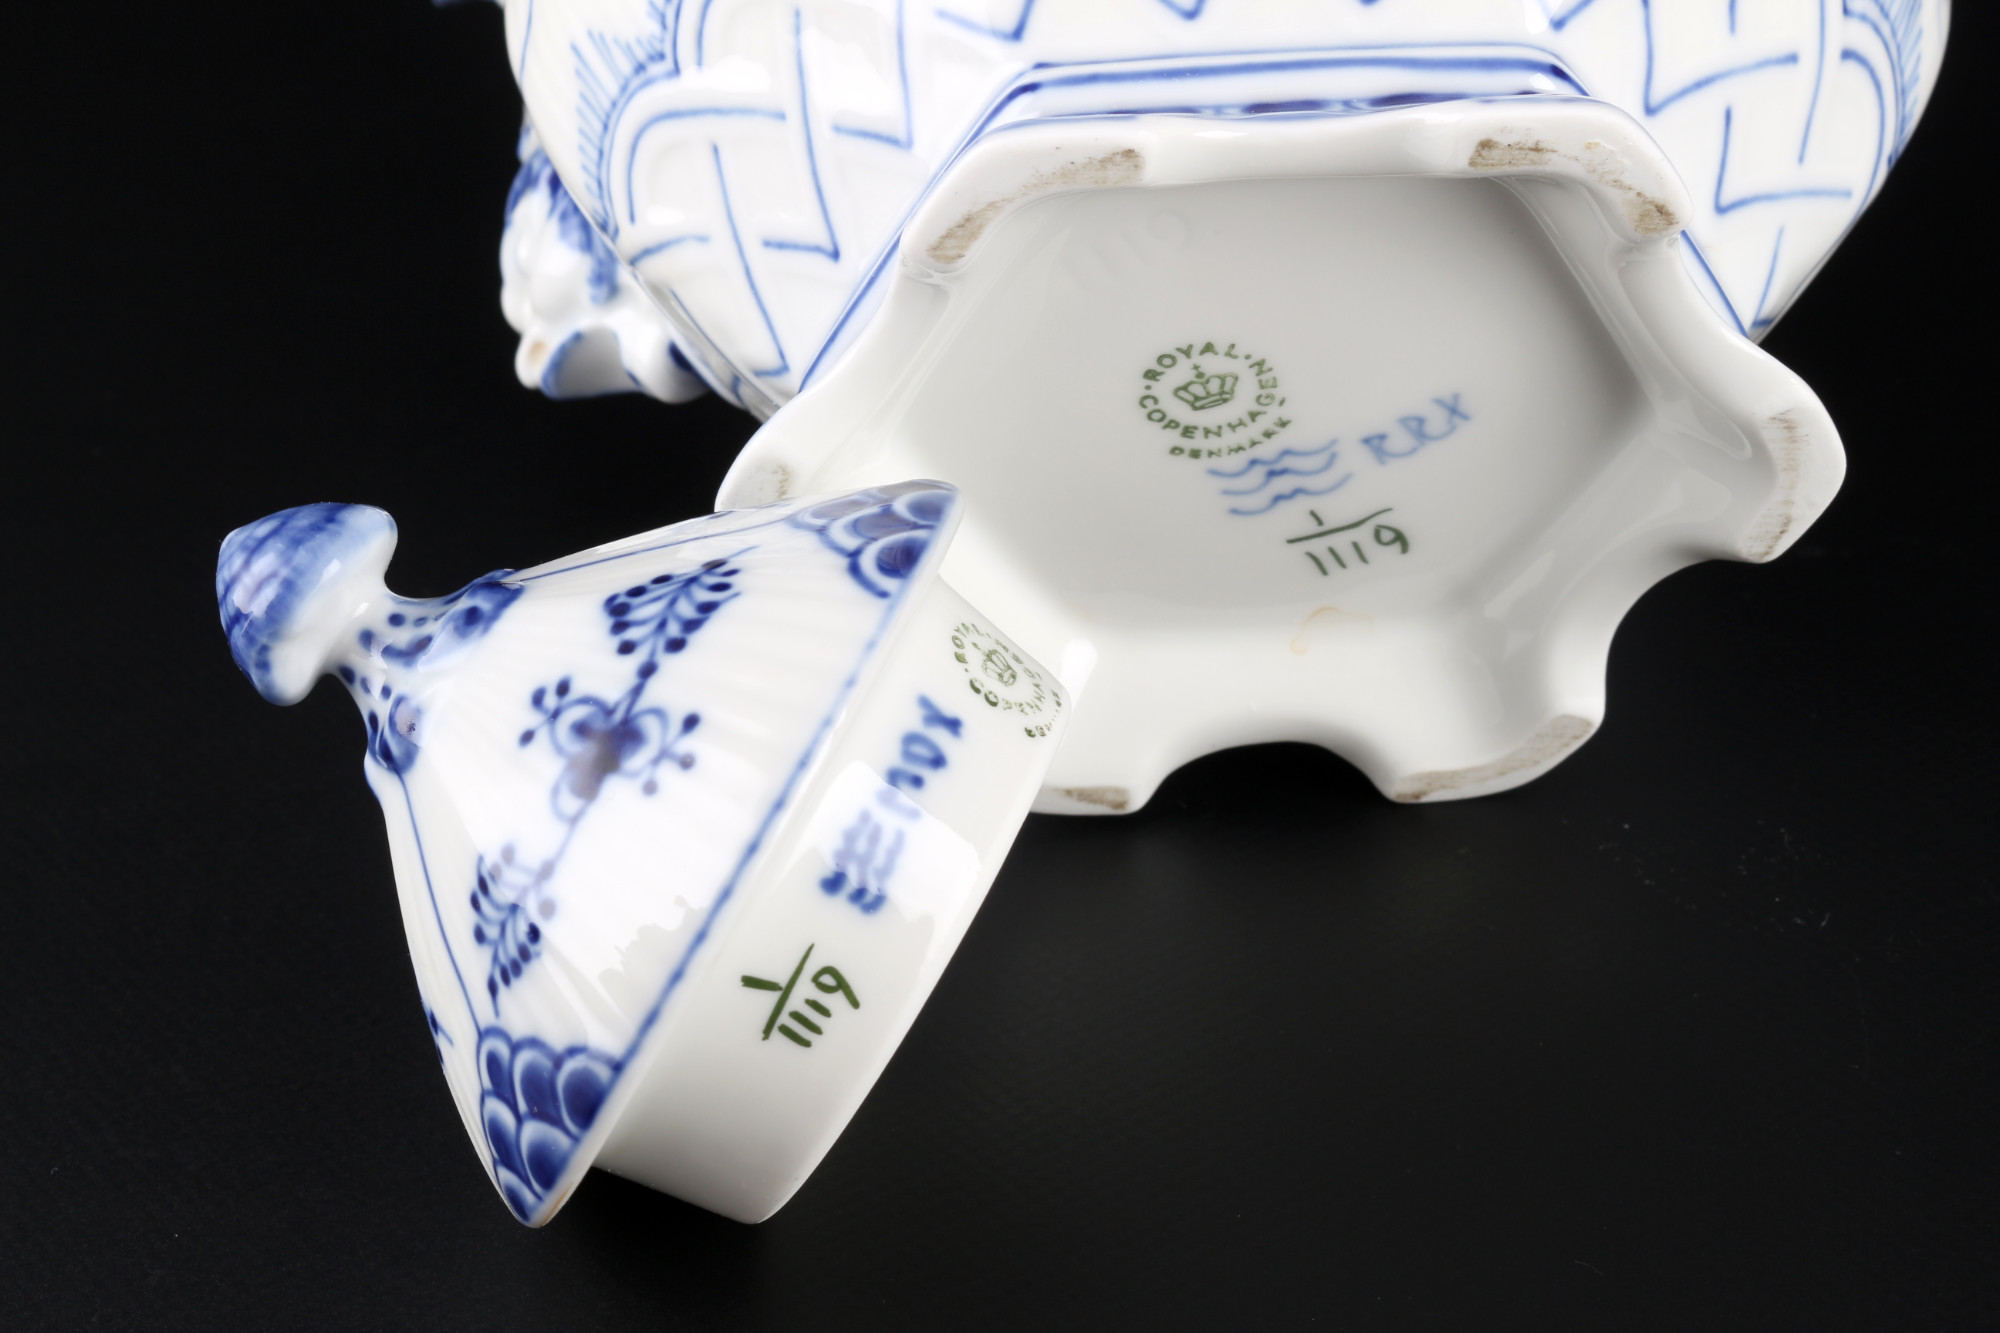 Royal Copenhagen Musselmalet Full Lace tea pot 1119 1st choice, Vollspitze Teekanne, - Image 4 of 4